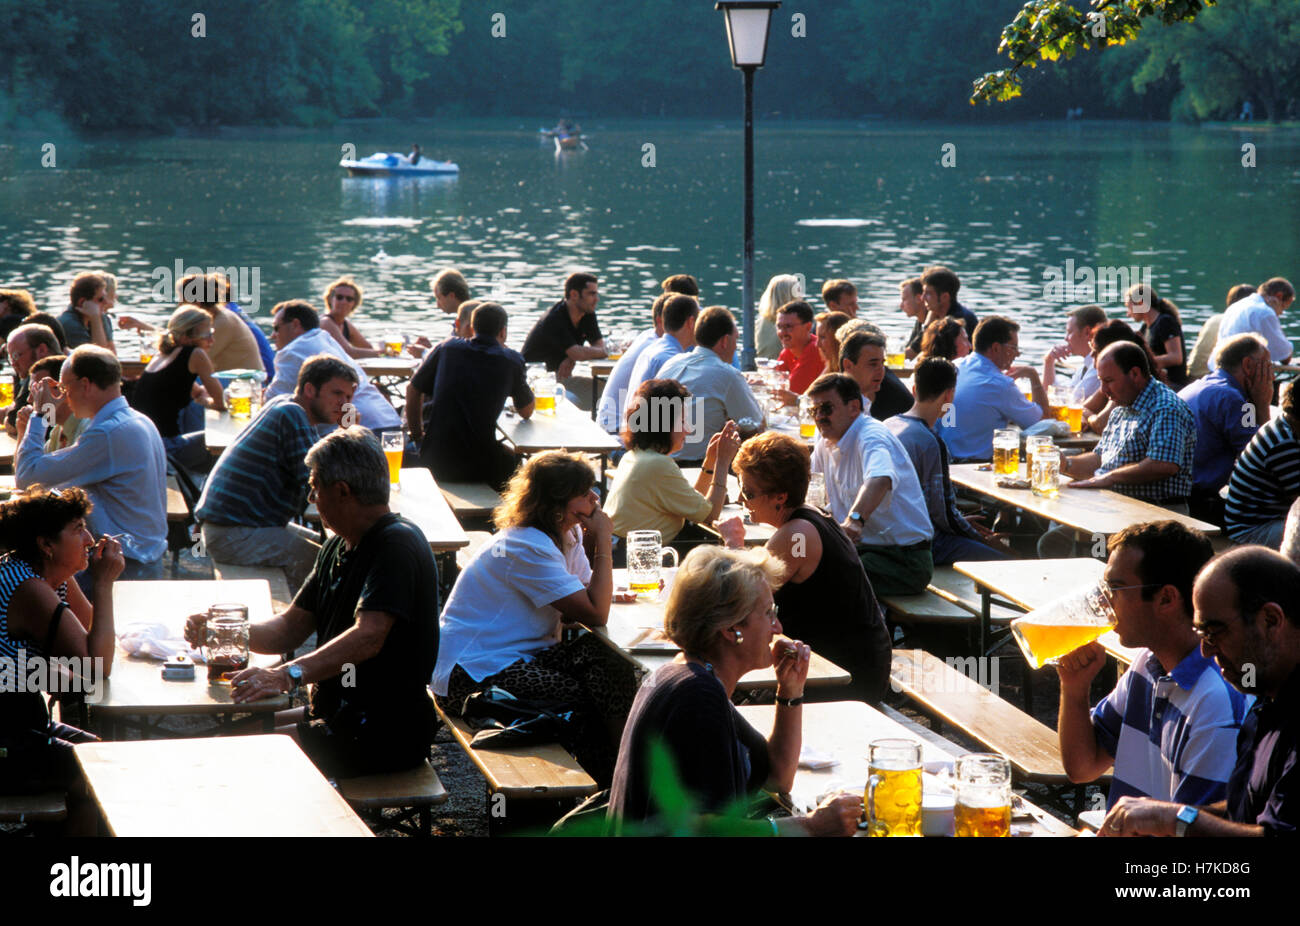 Seehaus beer garden on the Kleinhesseloher See lake, people drinking beer, English Garden, Munich, Bavaria Stock Photo